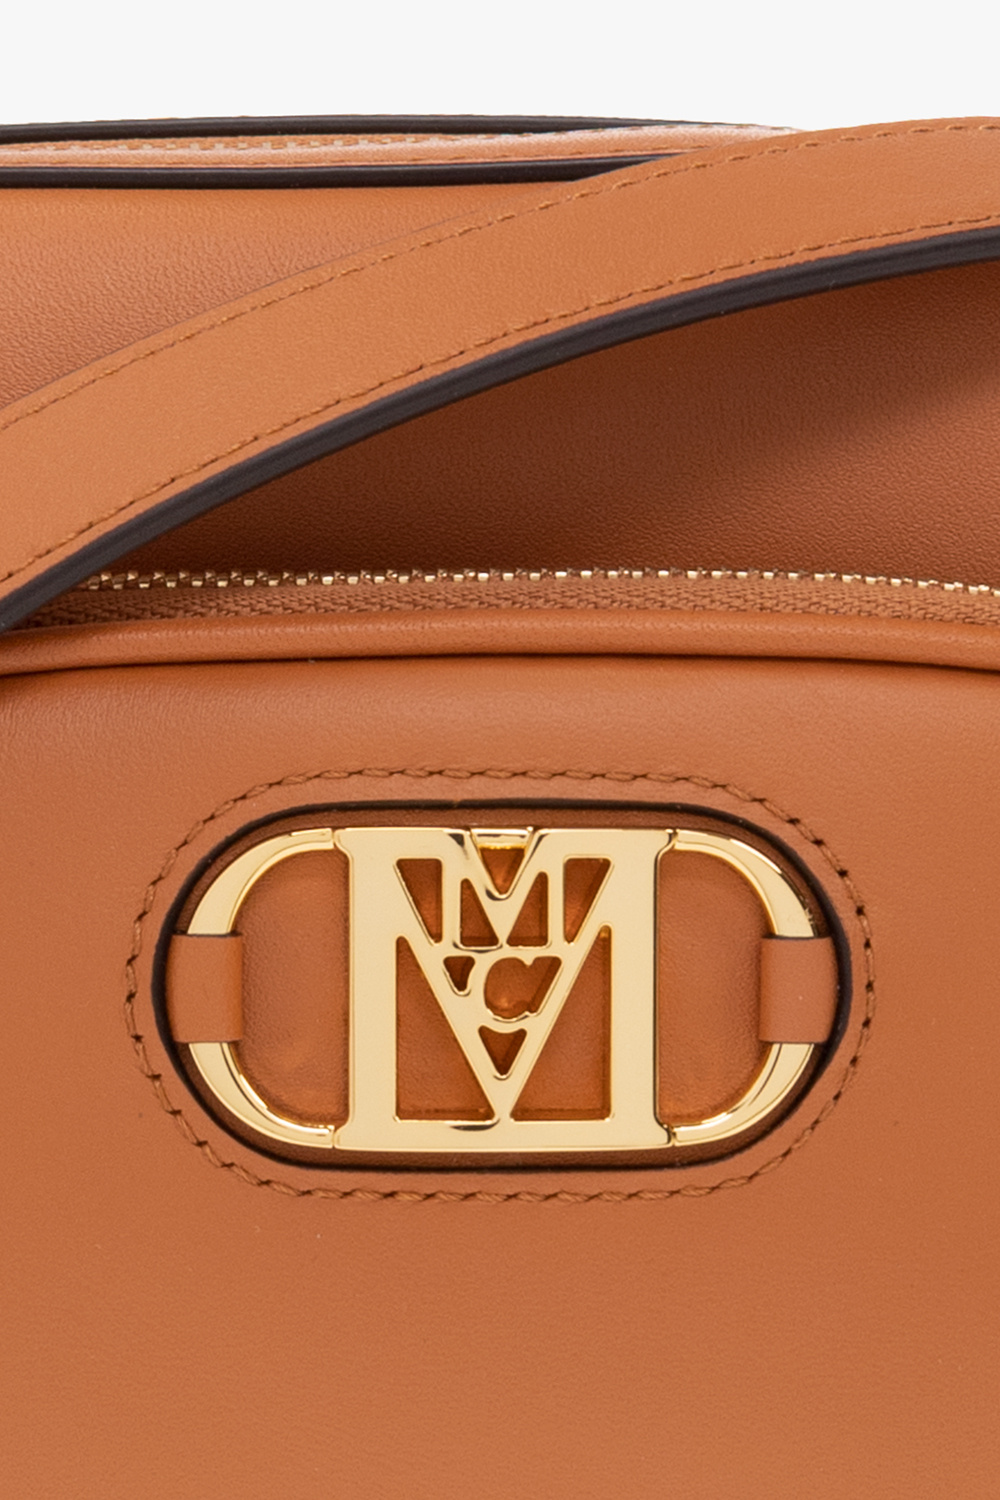 MCM ‘Mode Travia Mini’ shoulder grained bag